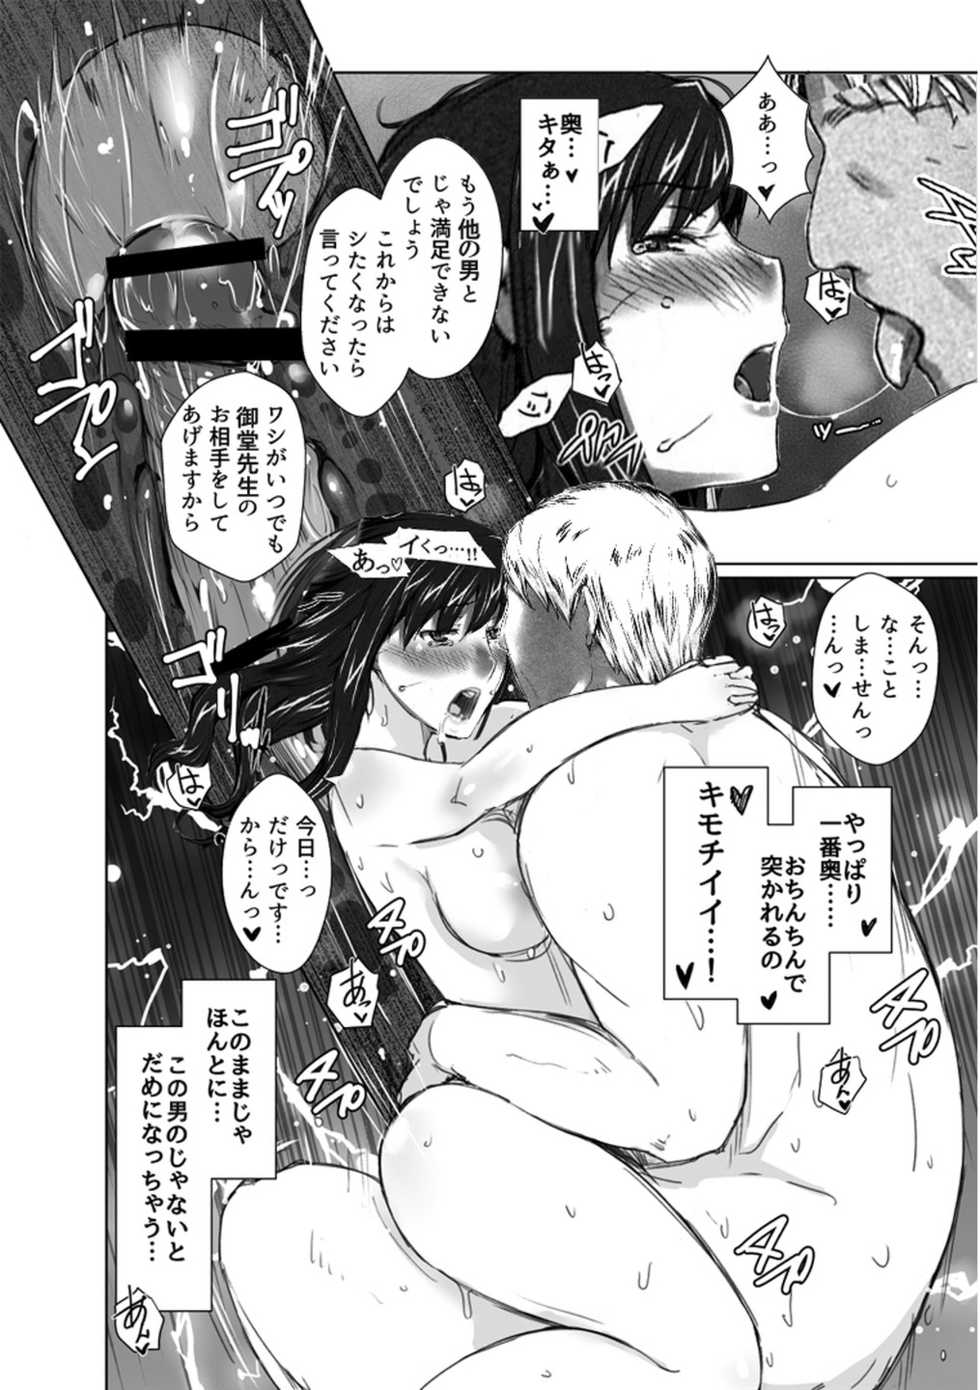 Sakiko-san in delusion Vol.1 Ver.1.1 ~Sakiko-san's circumstance at an educational training~ Stupid Sakiko (collage) on-going - Page 32